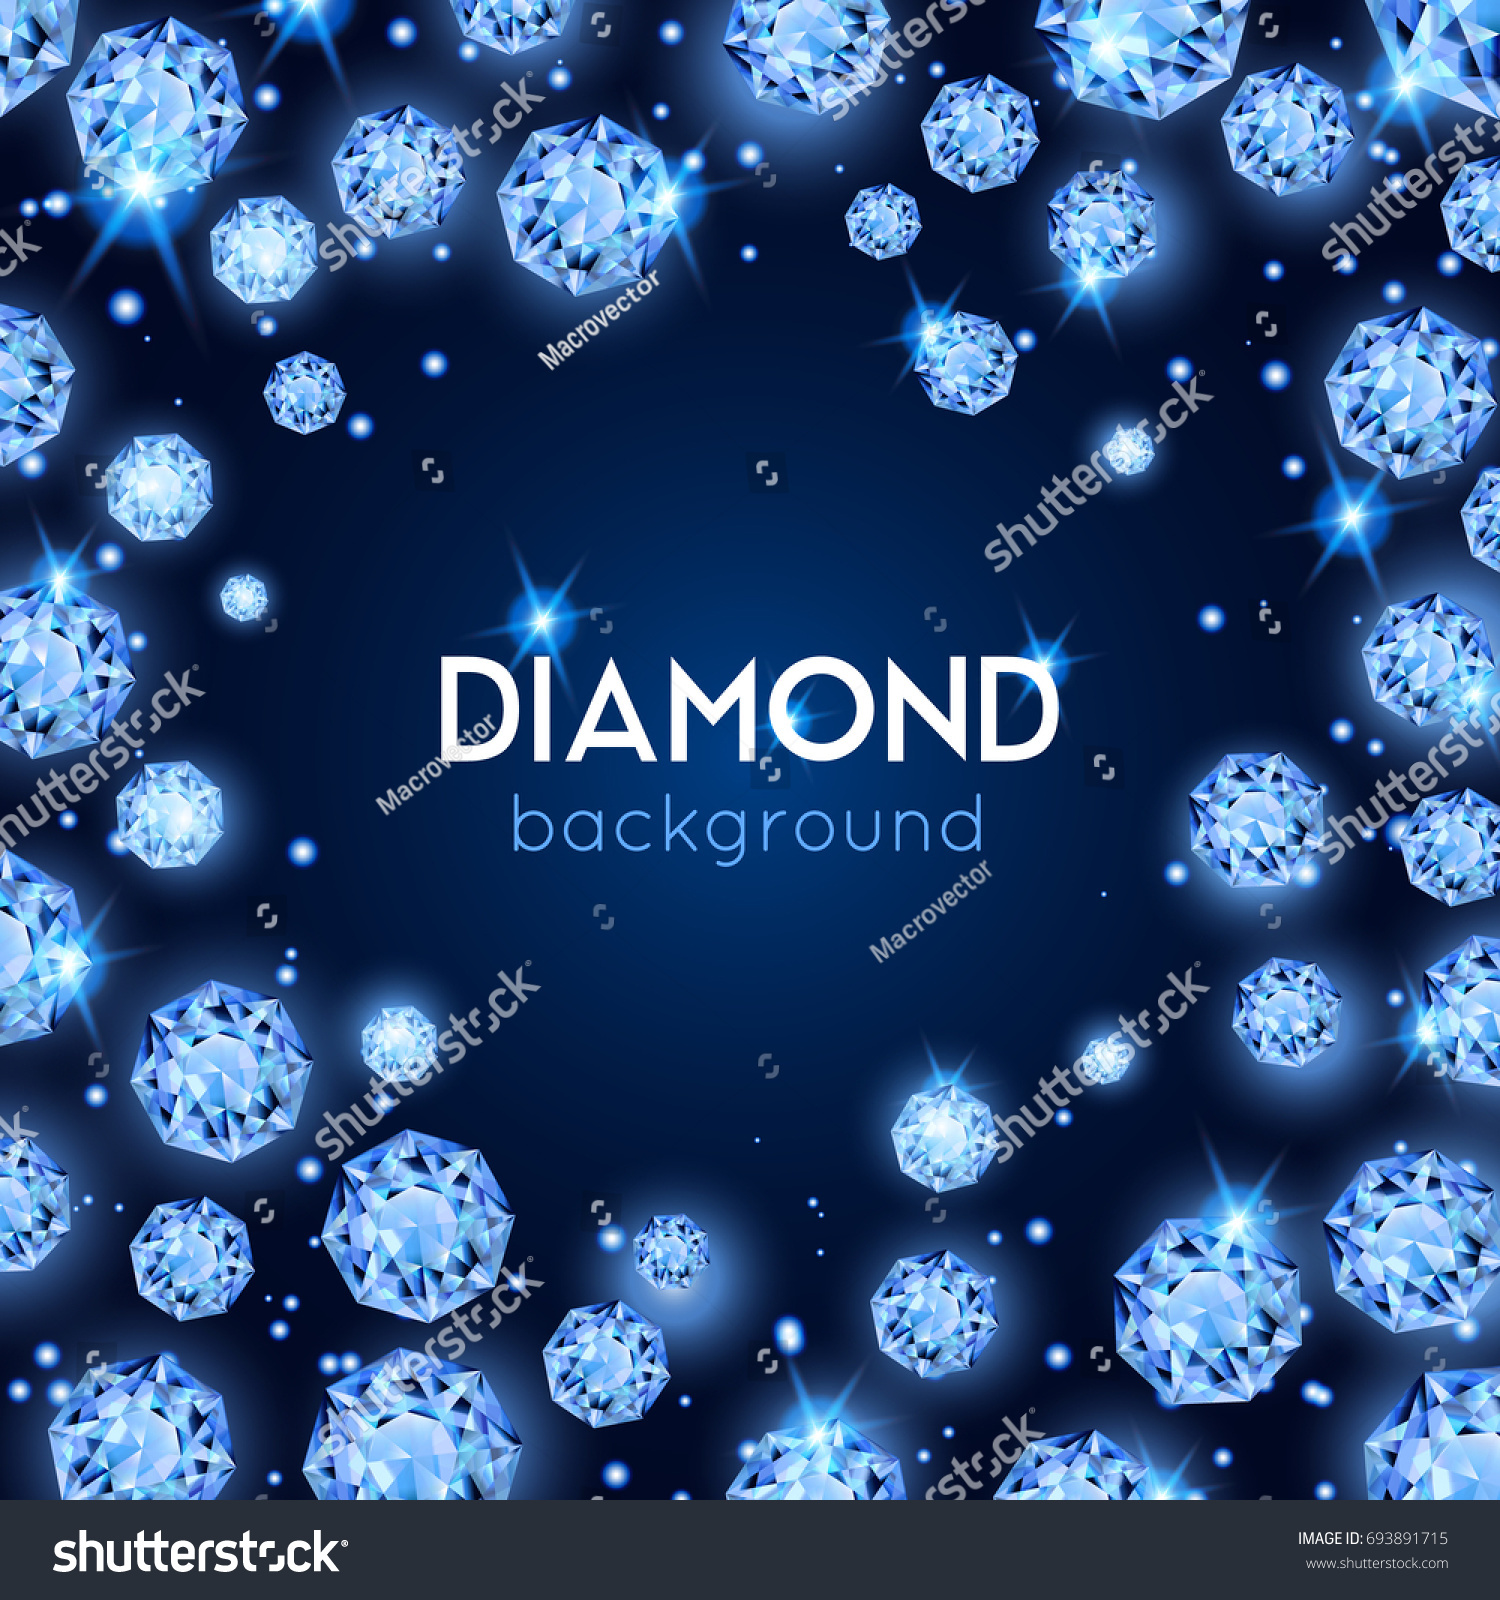 55,897 Diamond flyers Images, Stock Photos & Vectors | Shutterstock